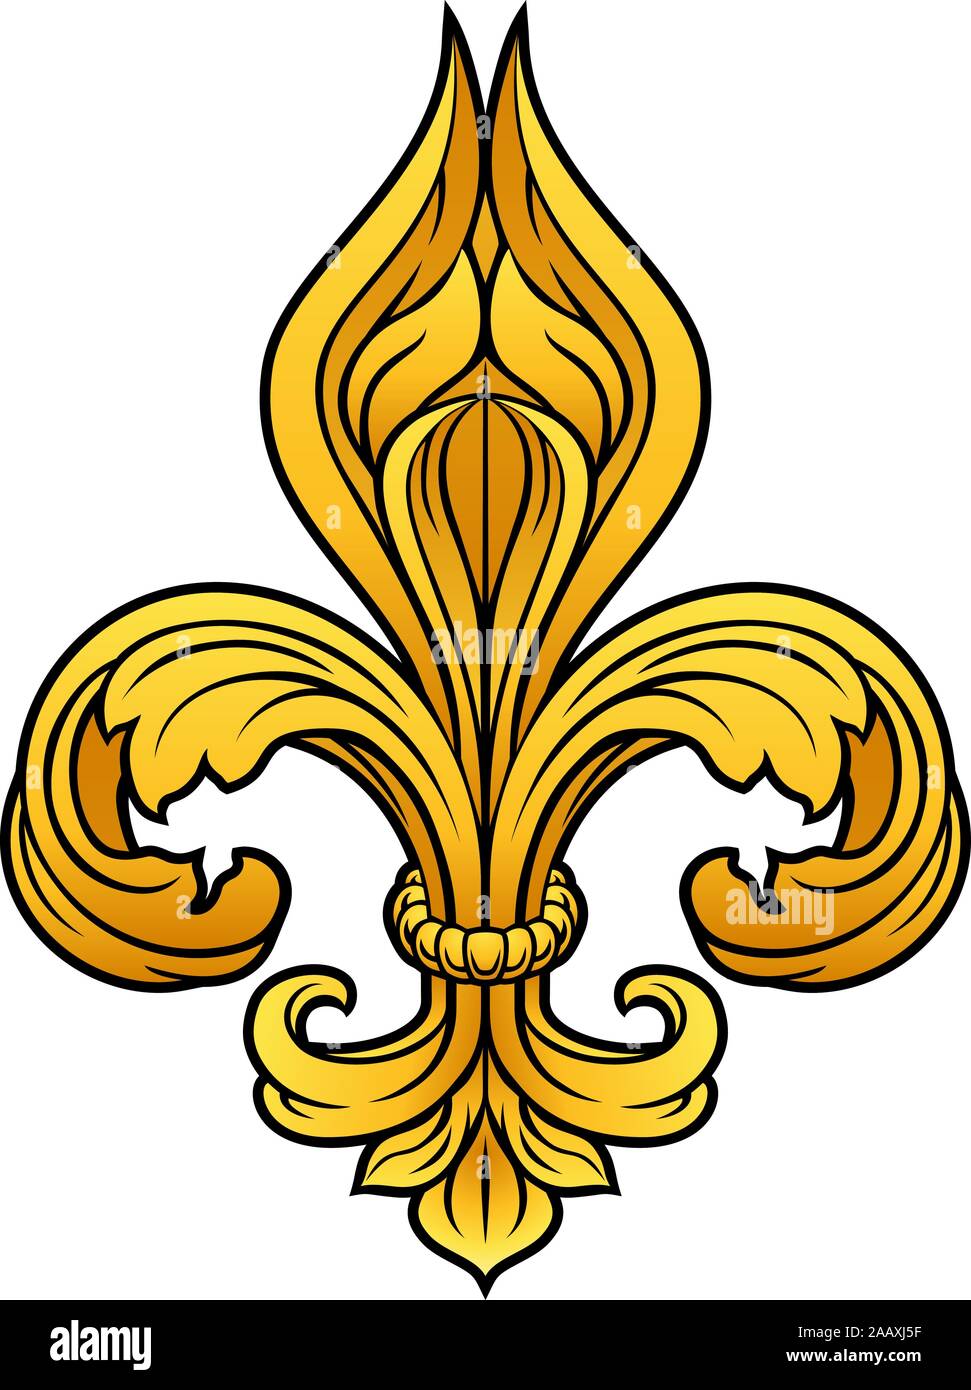 Fleur De Lis Gold Graphic Design Stock Vector